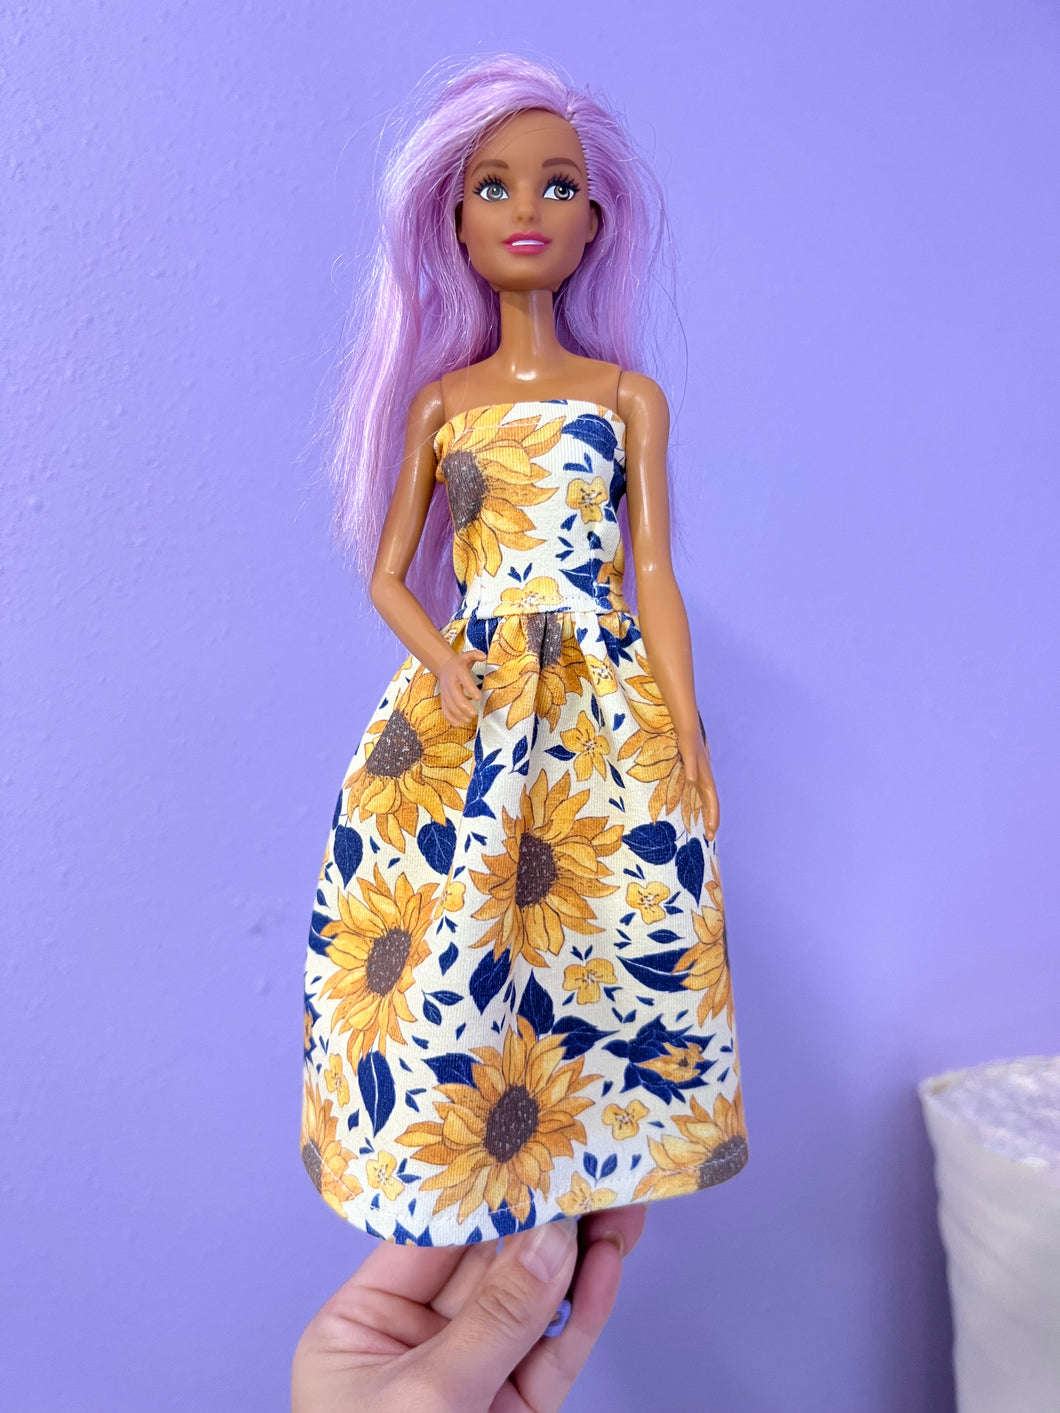 Emily’s Custom Barbie dress